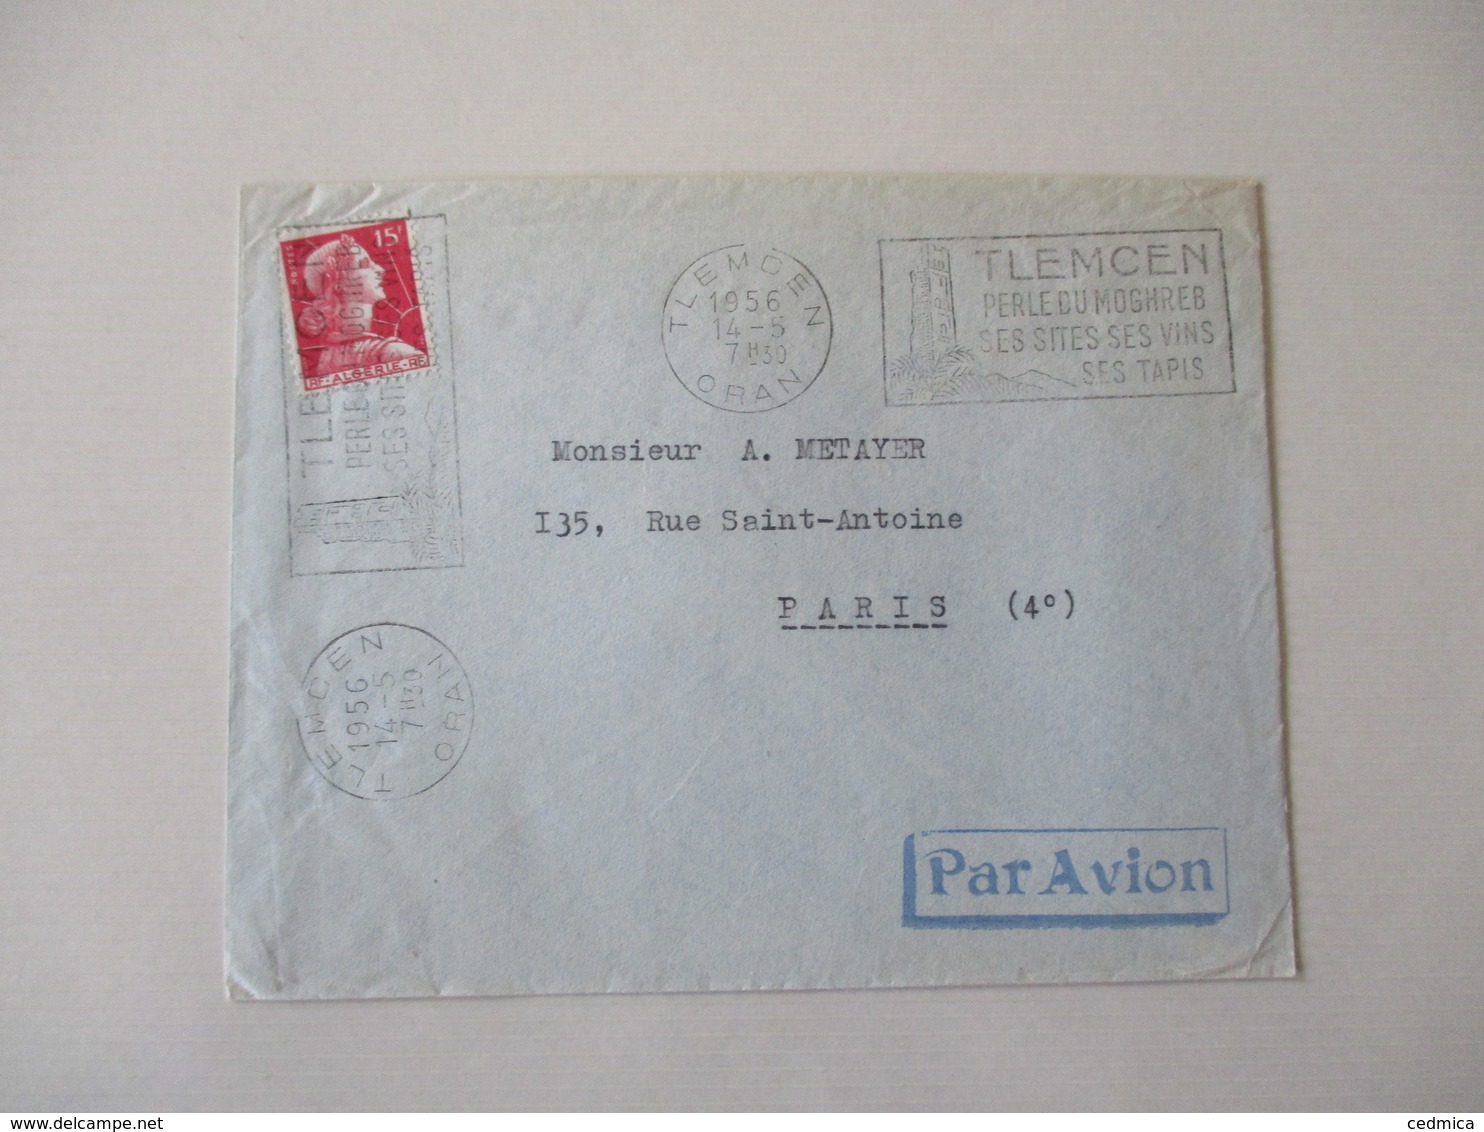 TLEMCEM 1956 13-5 ORAN TLEMCEM PERLE DU MOGHREB SES SITES SES VINS SES TAPIS TIMBRE 15F RF ALGERIE - Lettres & Documents